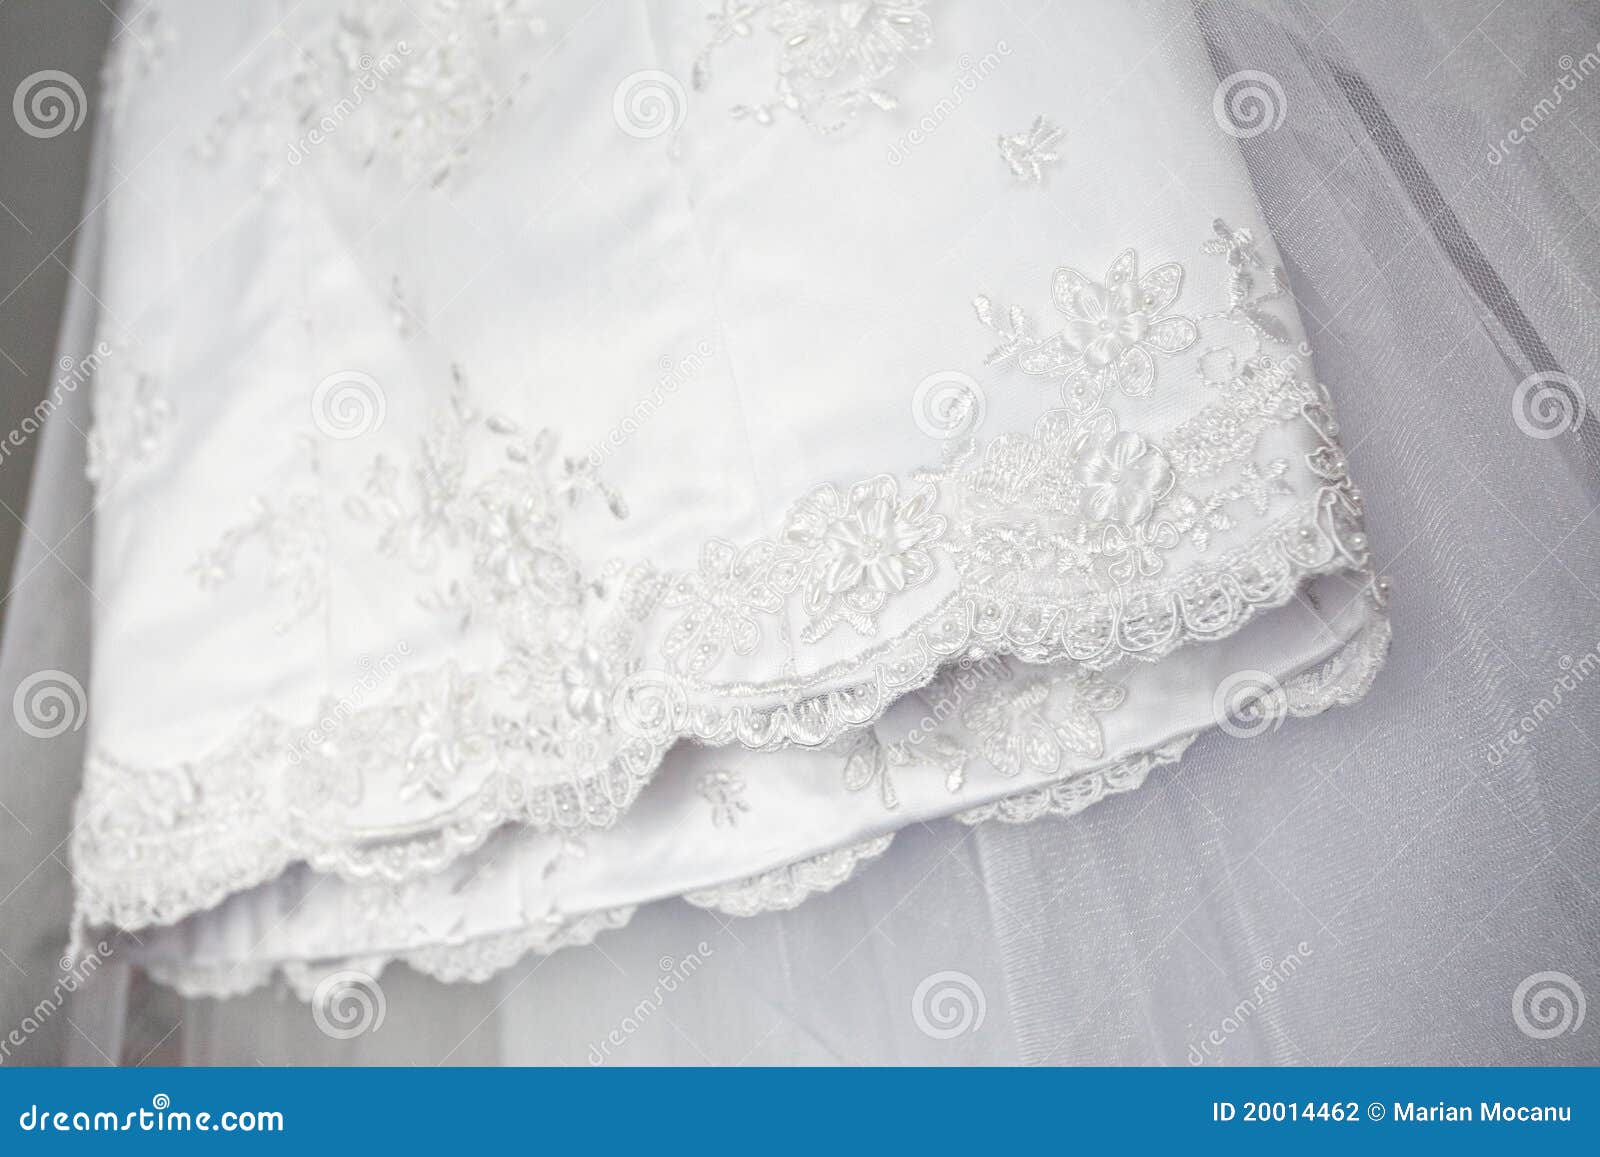 Wedding dress stock photo. Image of ceremony, wear, hanger - 20014462